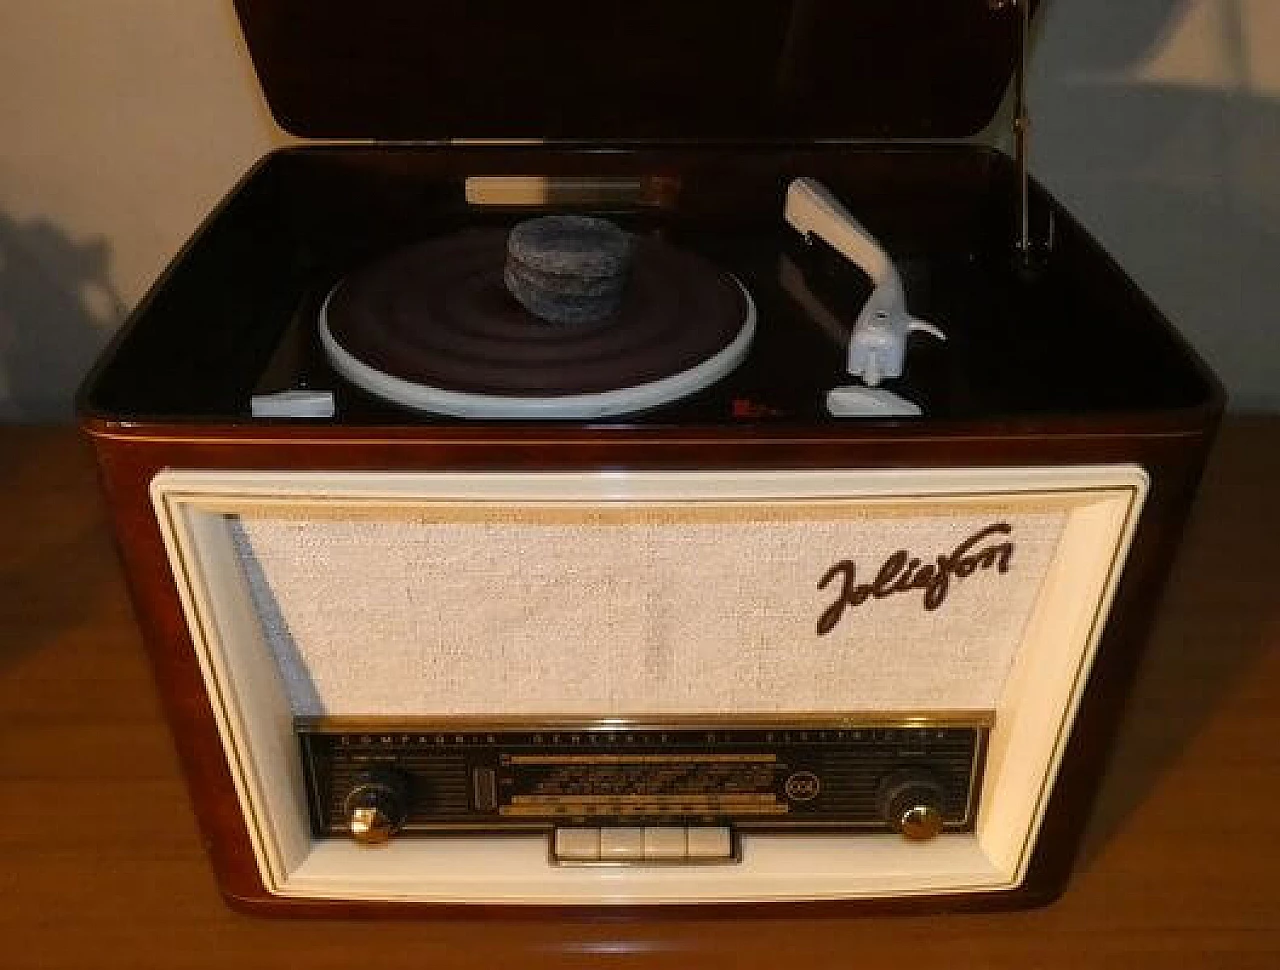 Wood Joliefon RFS 6597 turntable radio by CGE, 1950s 14